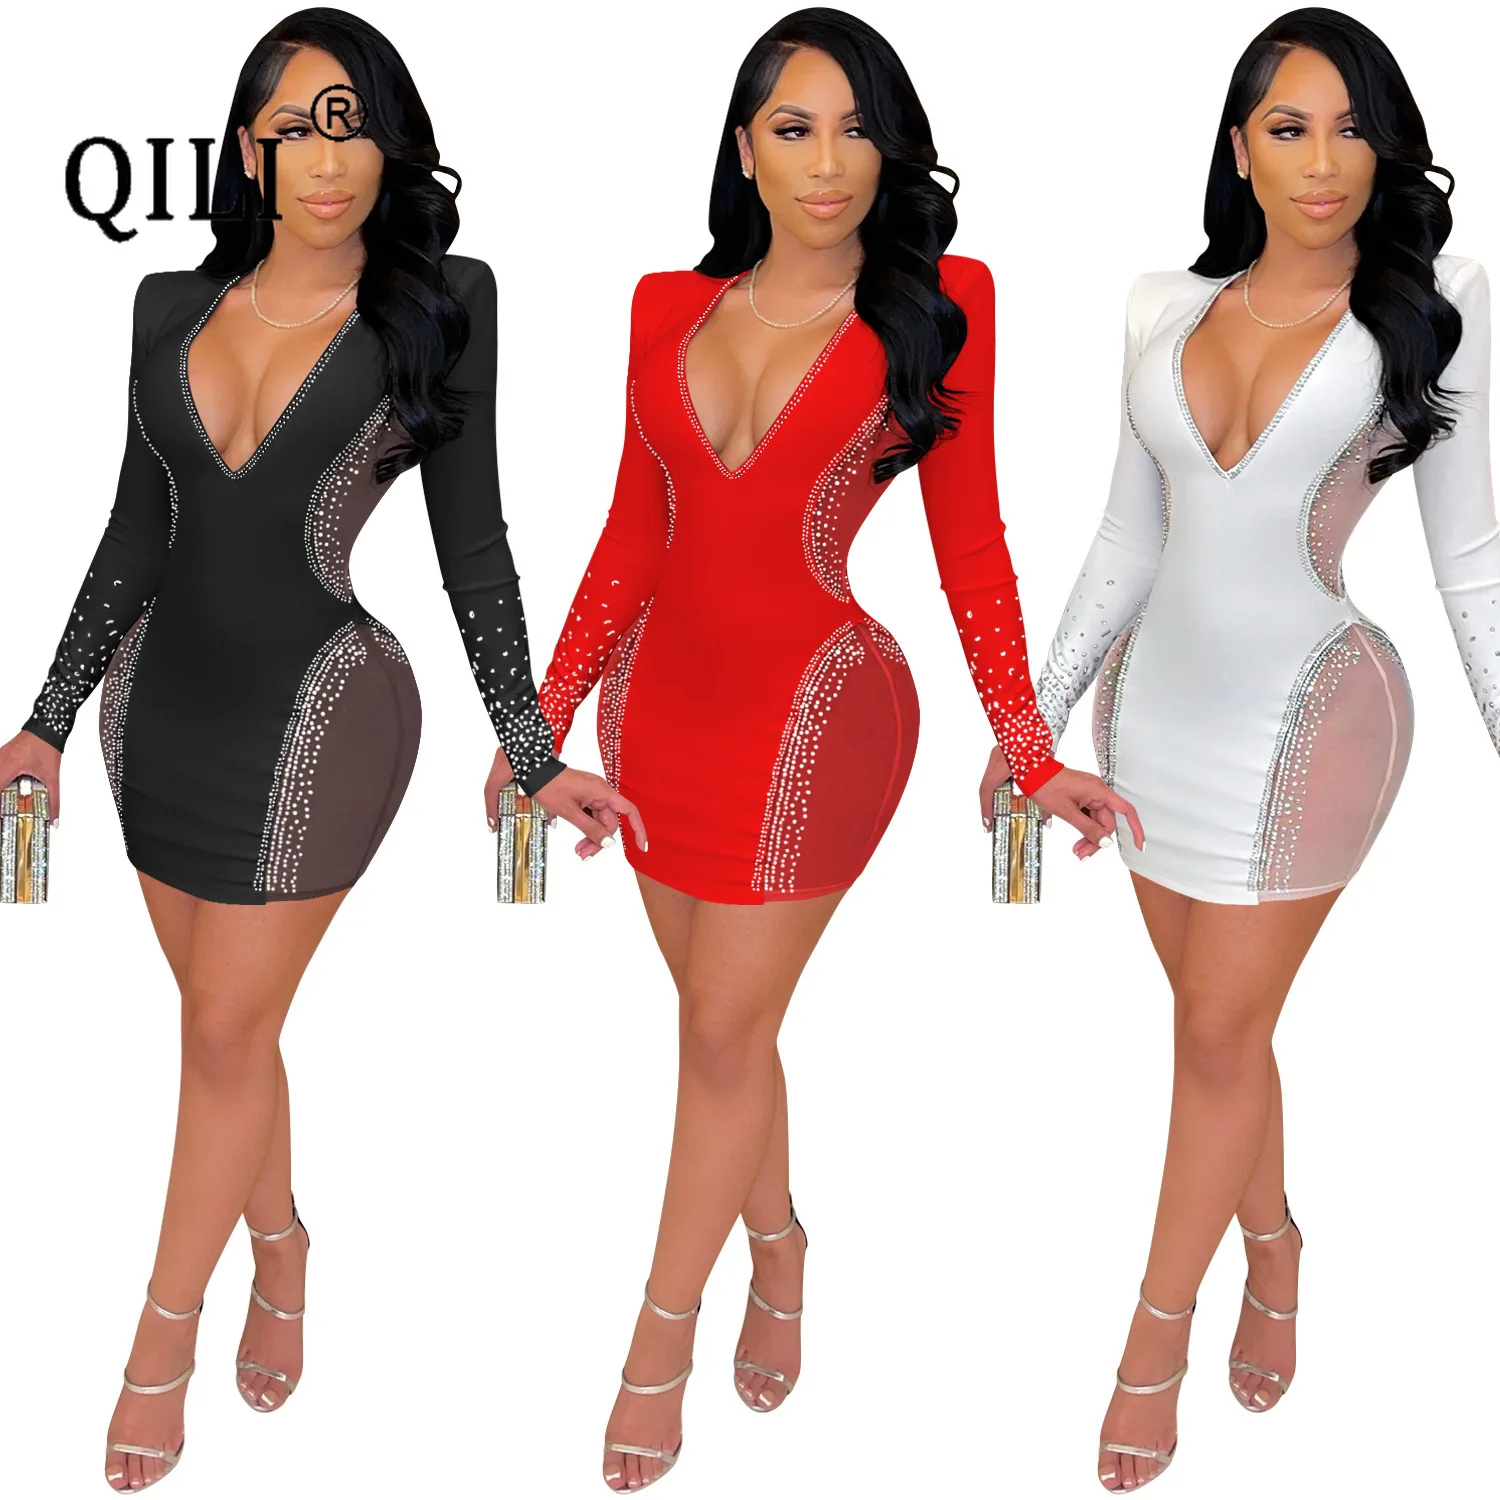 

QILI Sexy Deep V Nightclub Party Dress Hot Drilling Perspective Dresses Diamonds Full Sleeve Mini Dress Black Red White